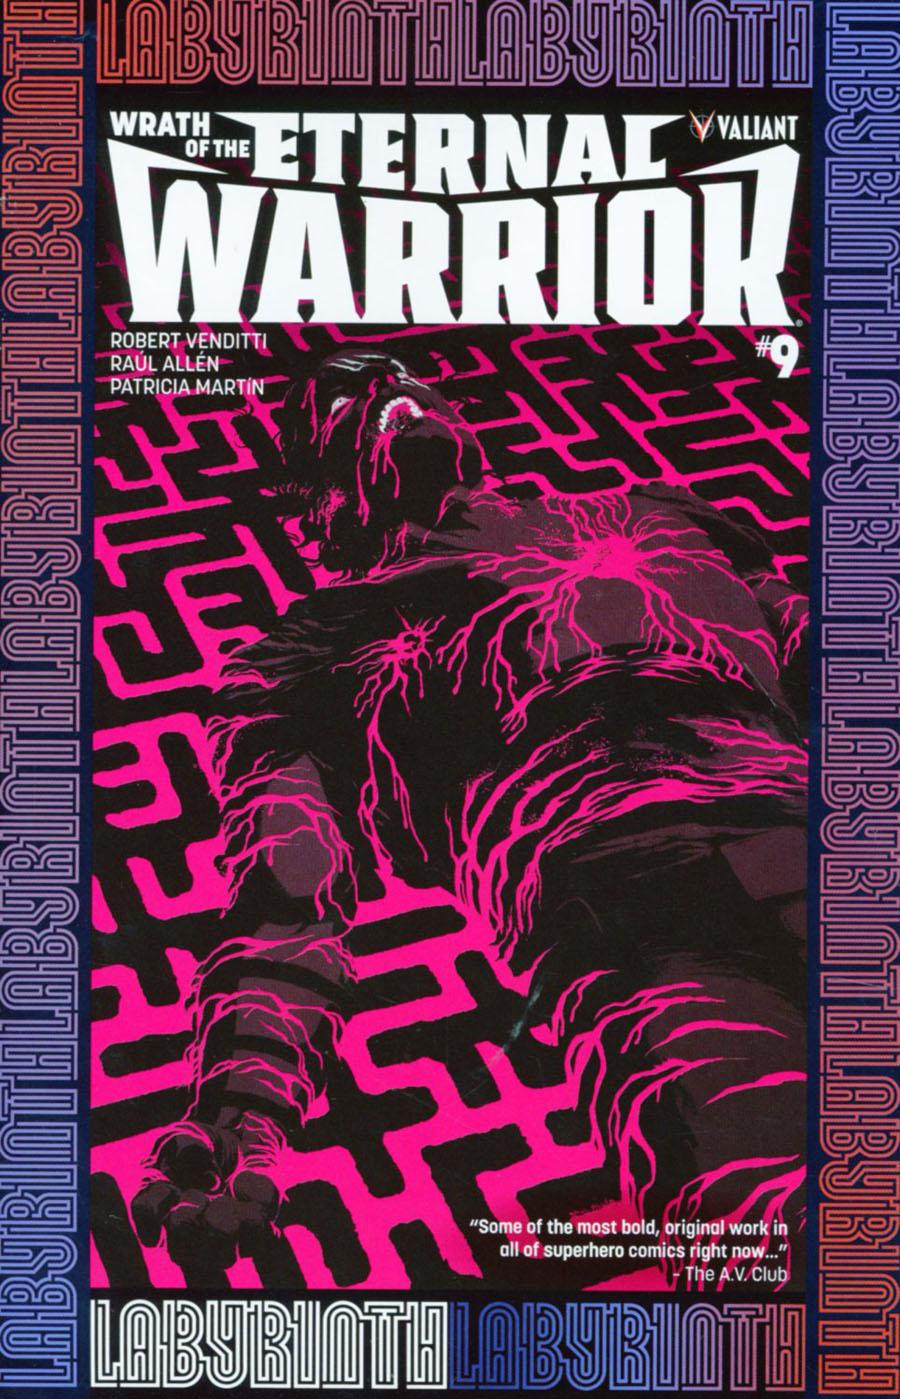 Wrath Of The Eternal Warrior Vol. 1 #9